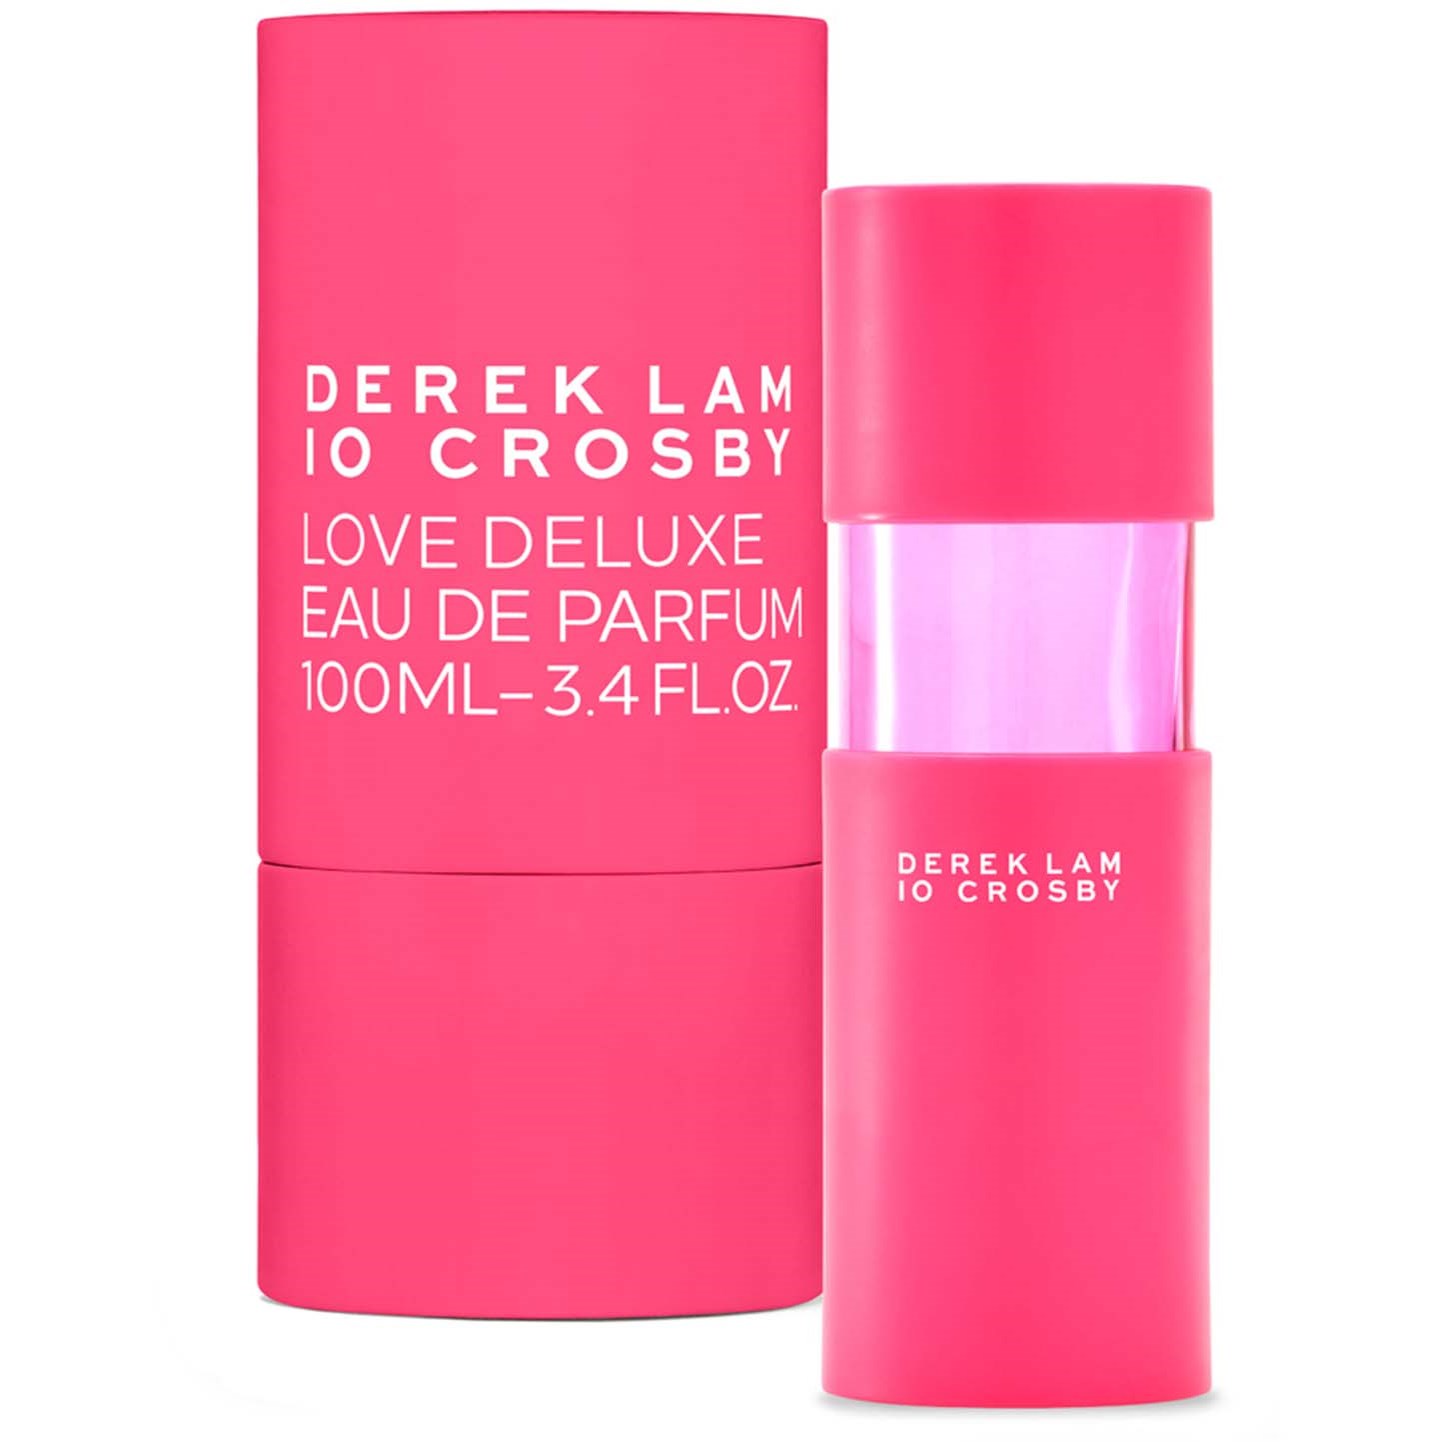 Läs mer om Derek Lam 10 Crosby Love Deluxe Eau de Parfum 100 ml